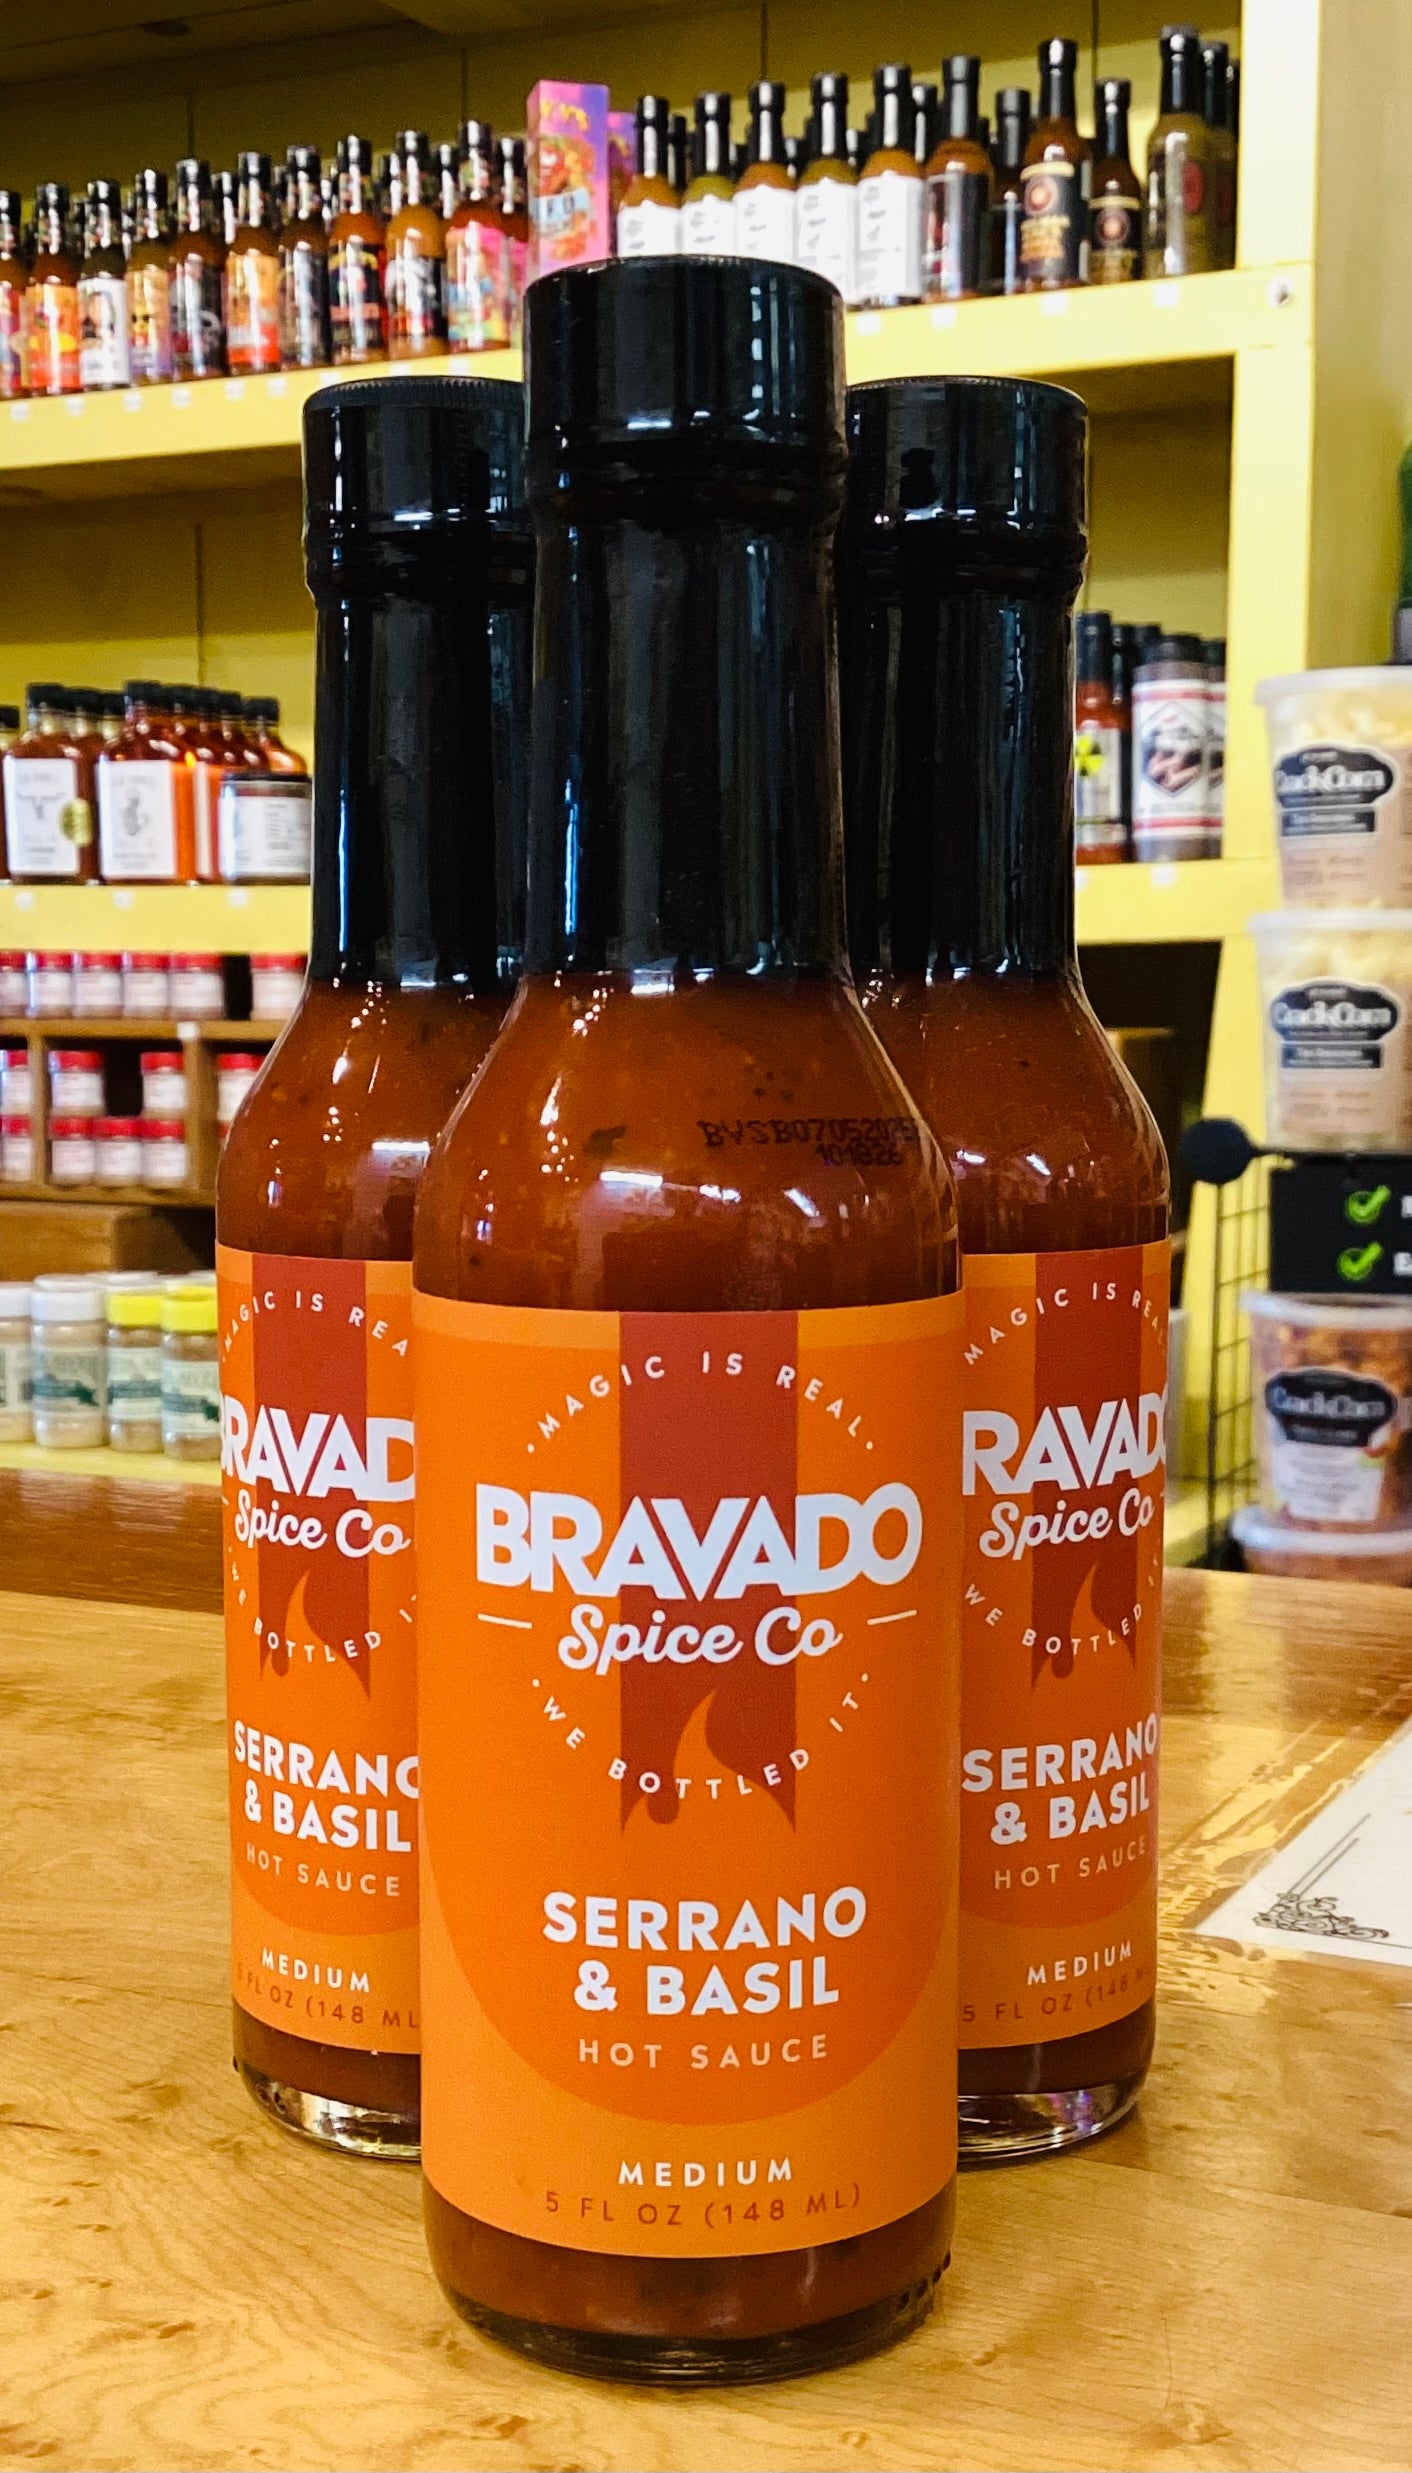 BRAVADO SPICE CO. Serrano & Basil Hot Sauce 5oz